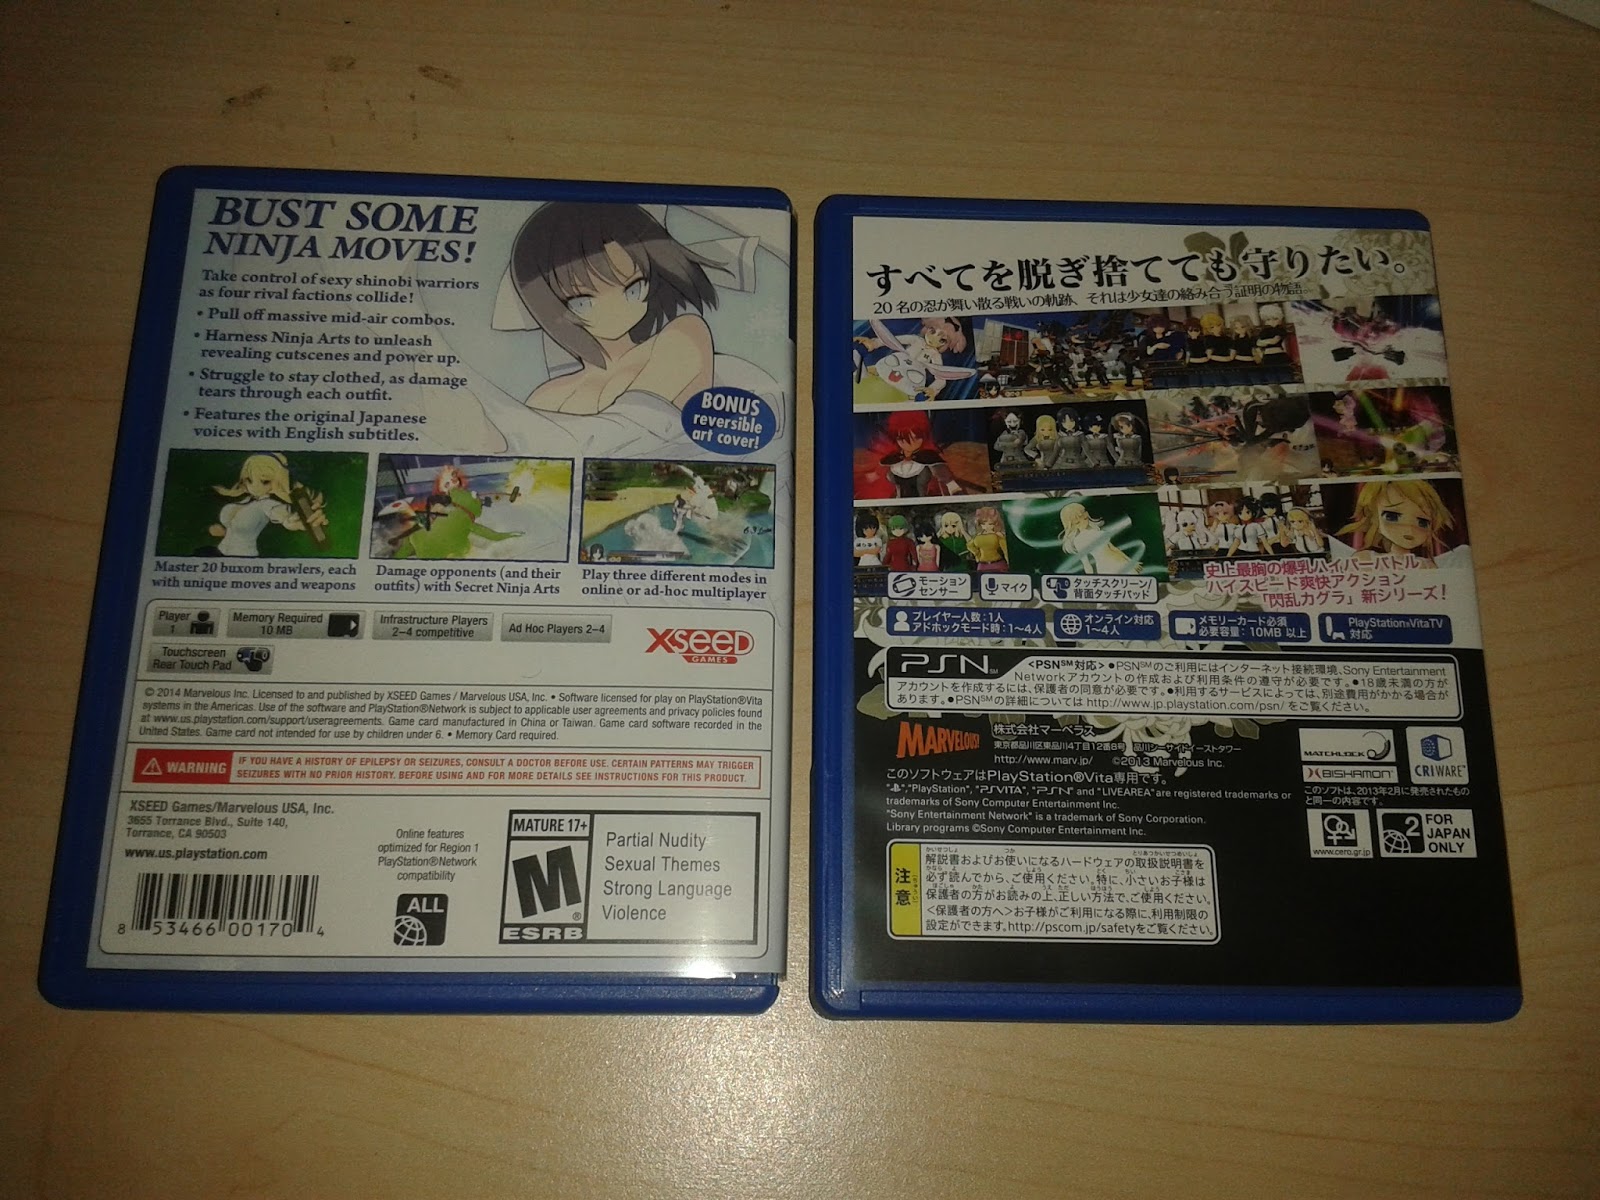  SENRAN KAGURA SHINOVI VERSUS - 'Let's Get Physical' Limited  Edition - PlayStation Vita : Xseed Jks: Video Games